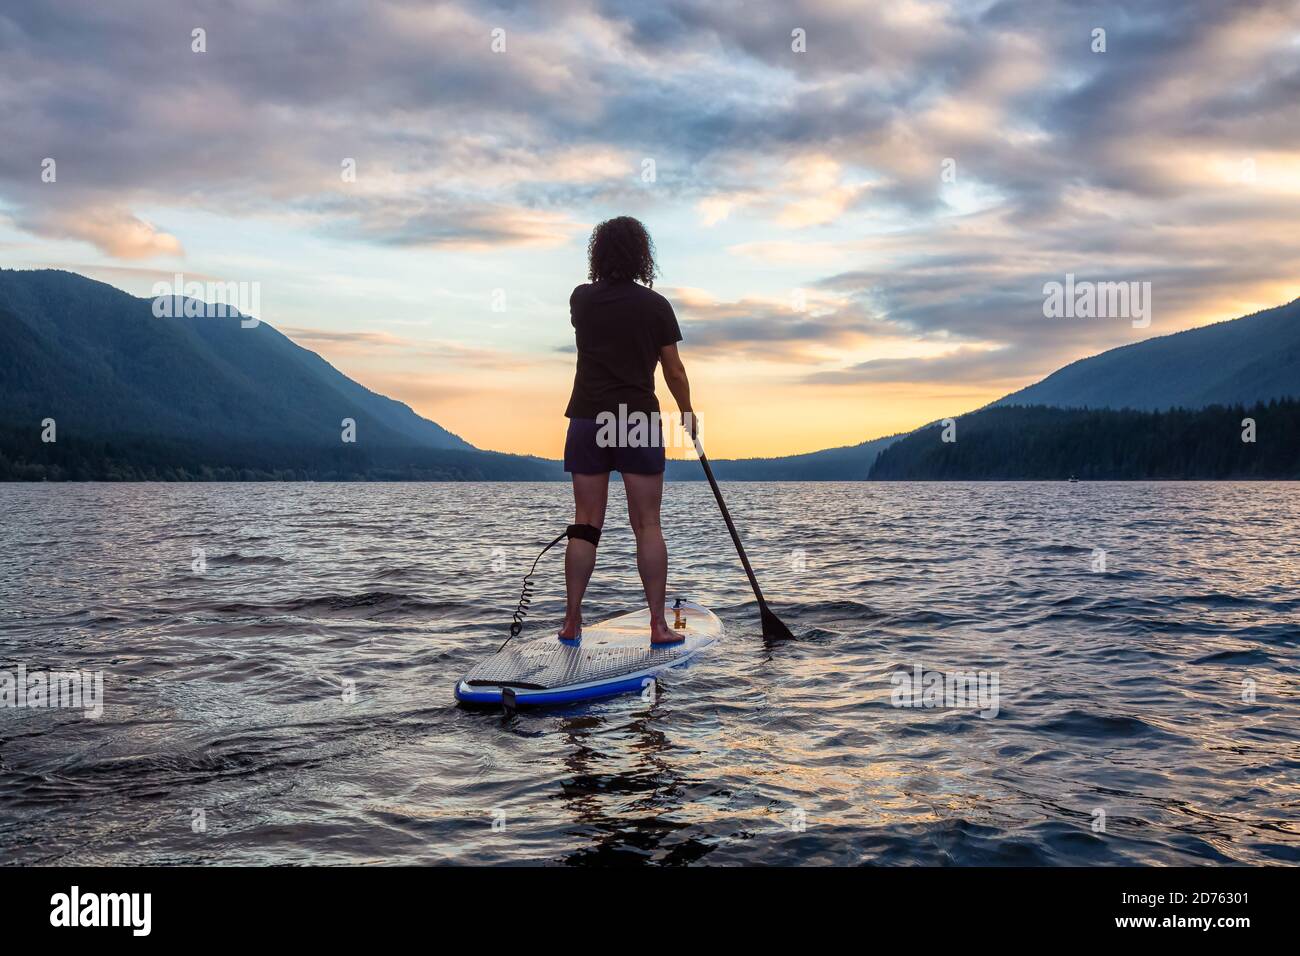 Woman Paddleboarding on Scenic Lake at Sunset Stock Photo